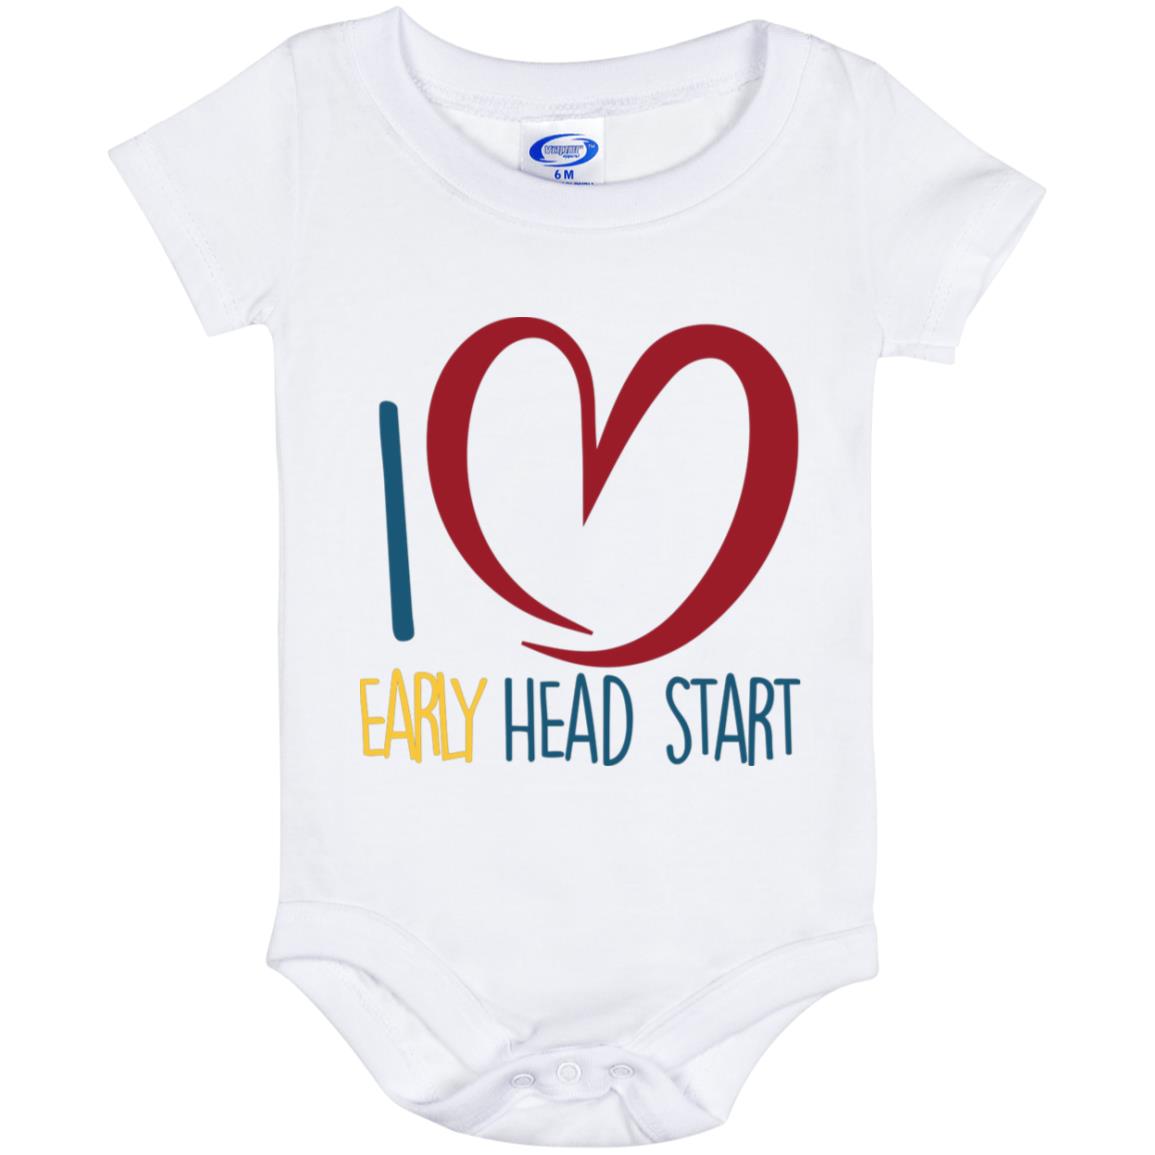 I Love Early Head Start 6 month onesie